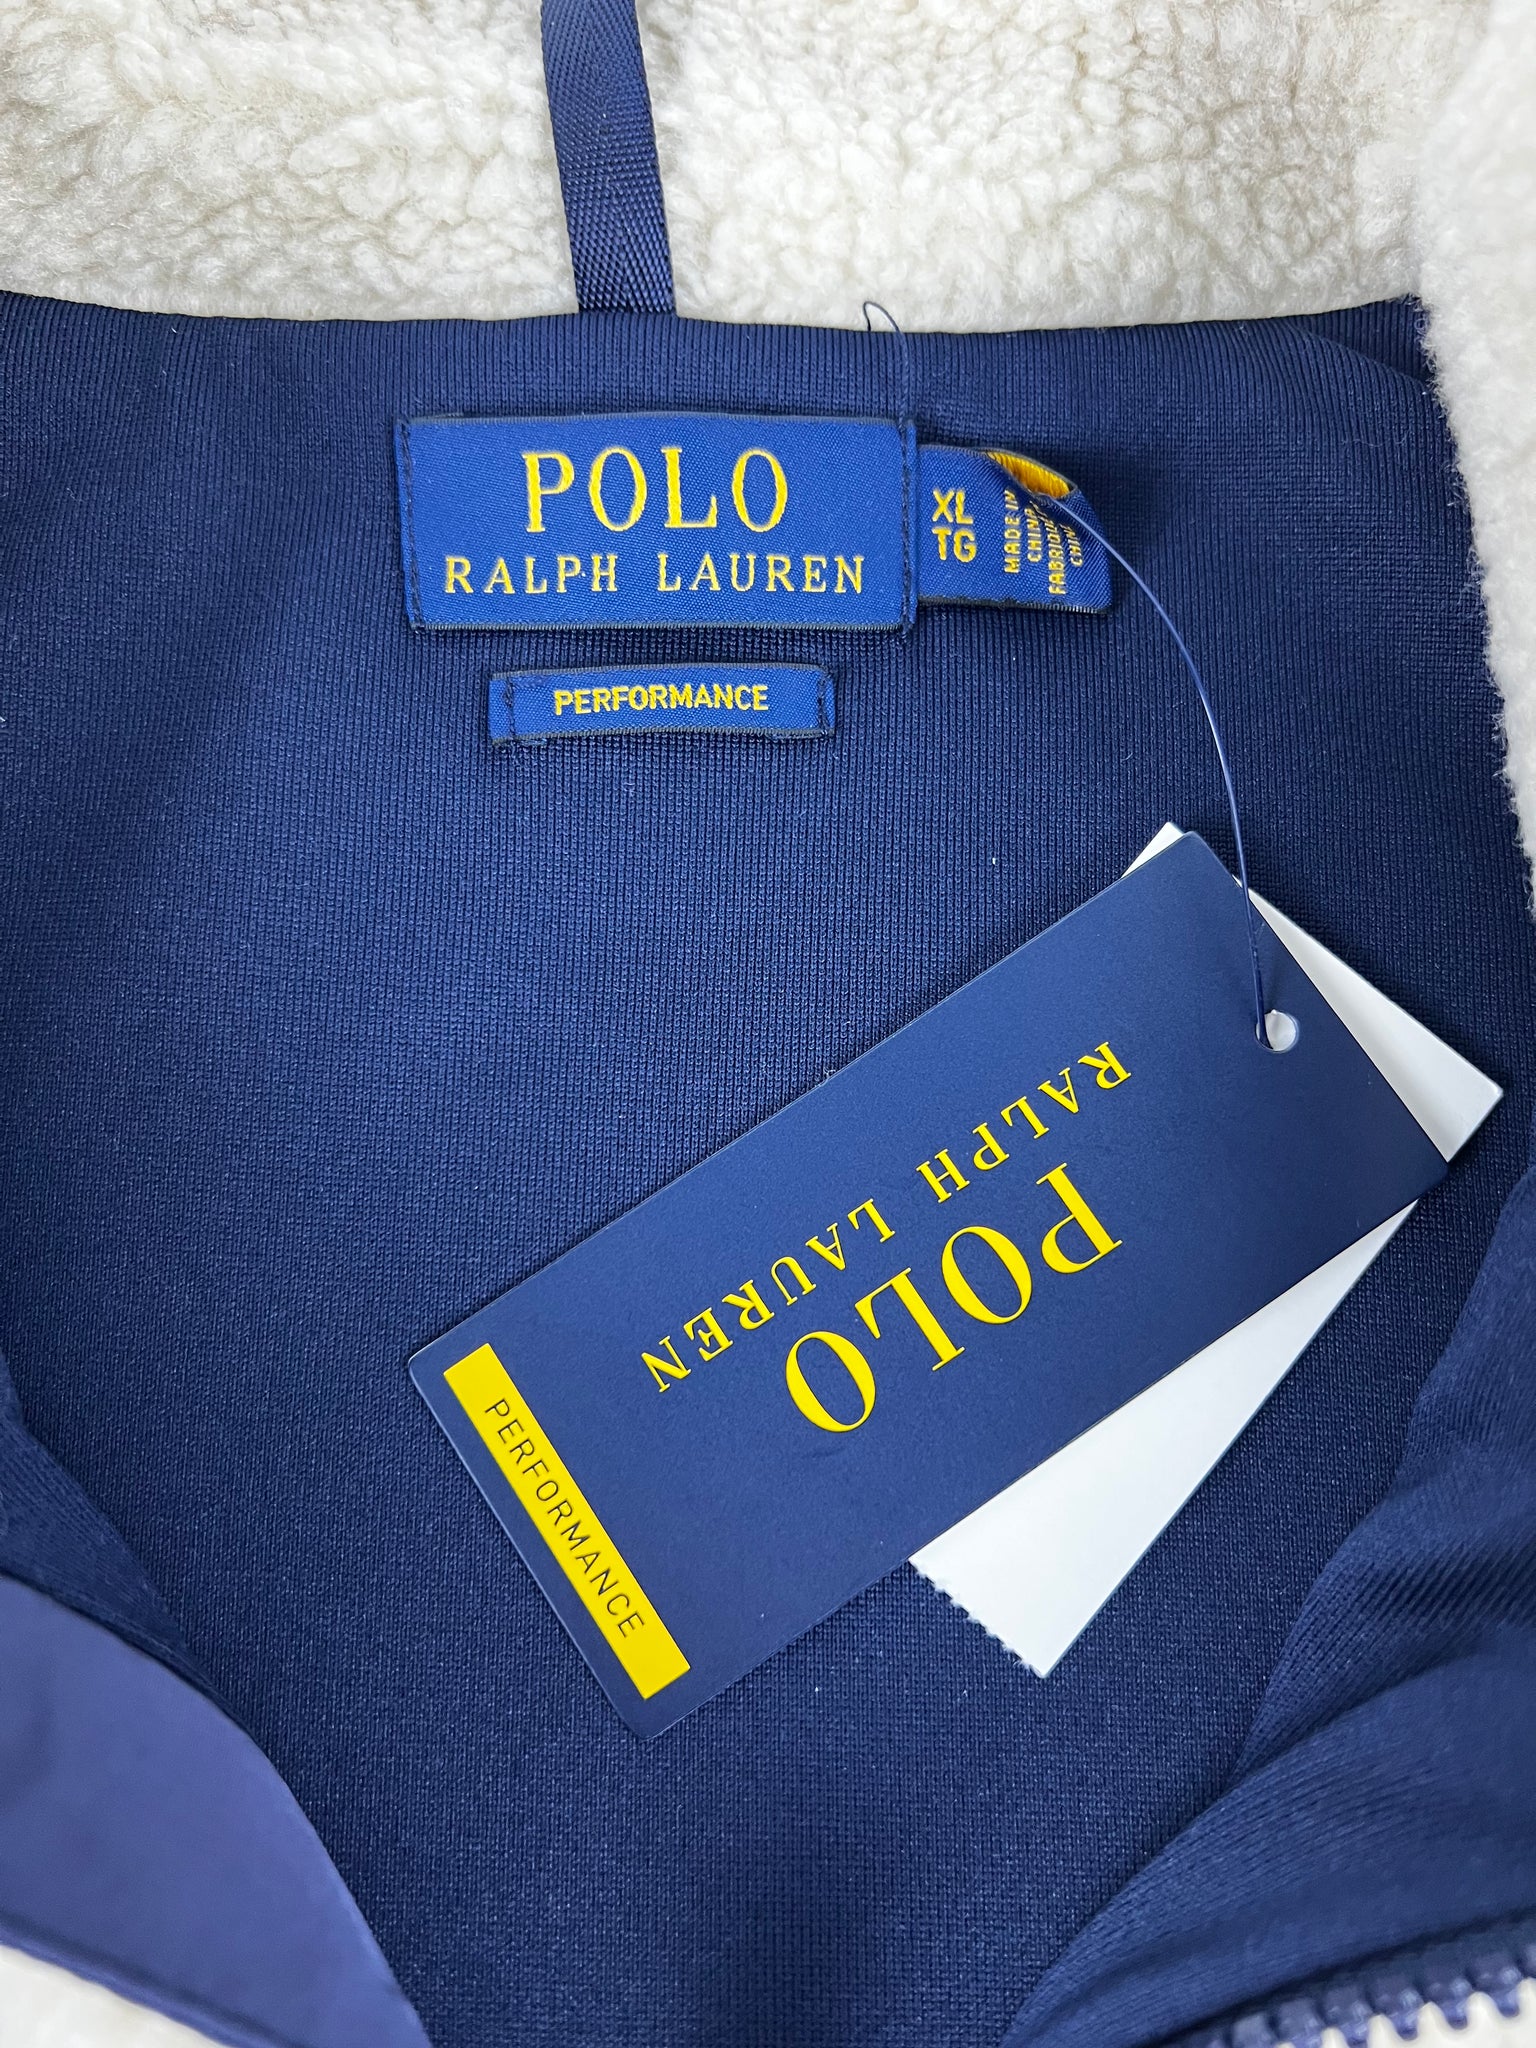 Deadstock 2017 Polo Ralph Lauren deep pile fleece jacket XXL